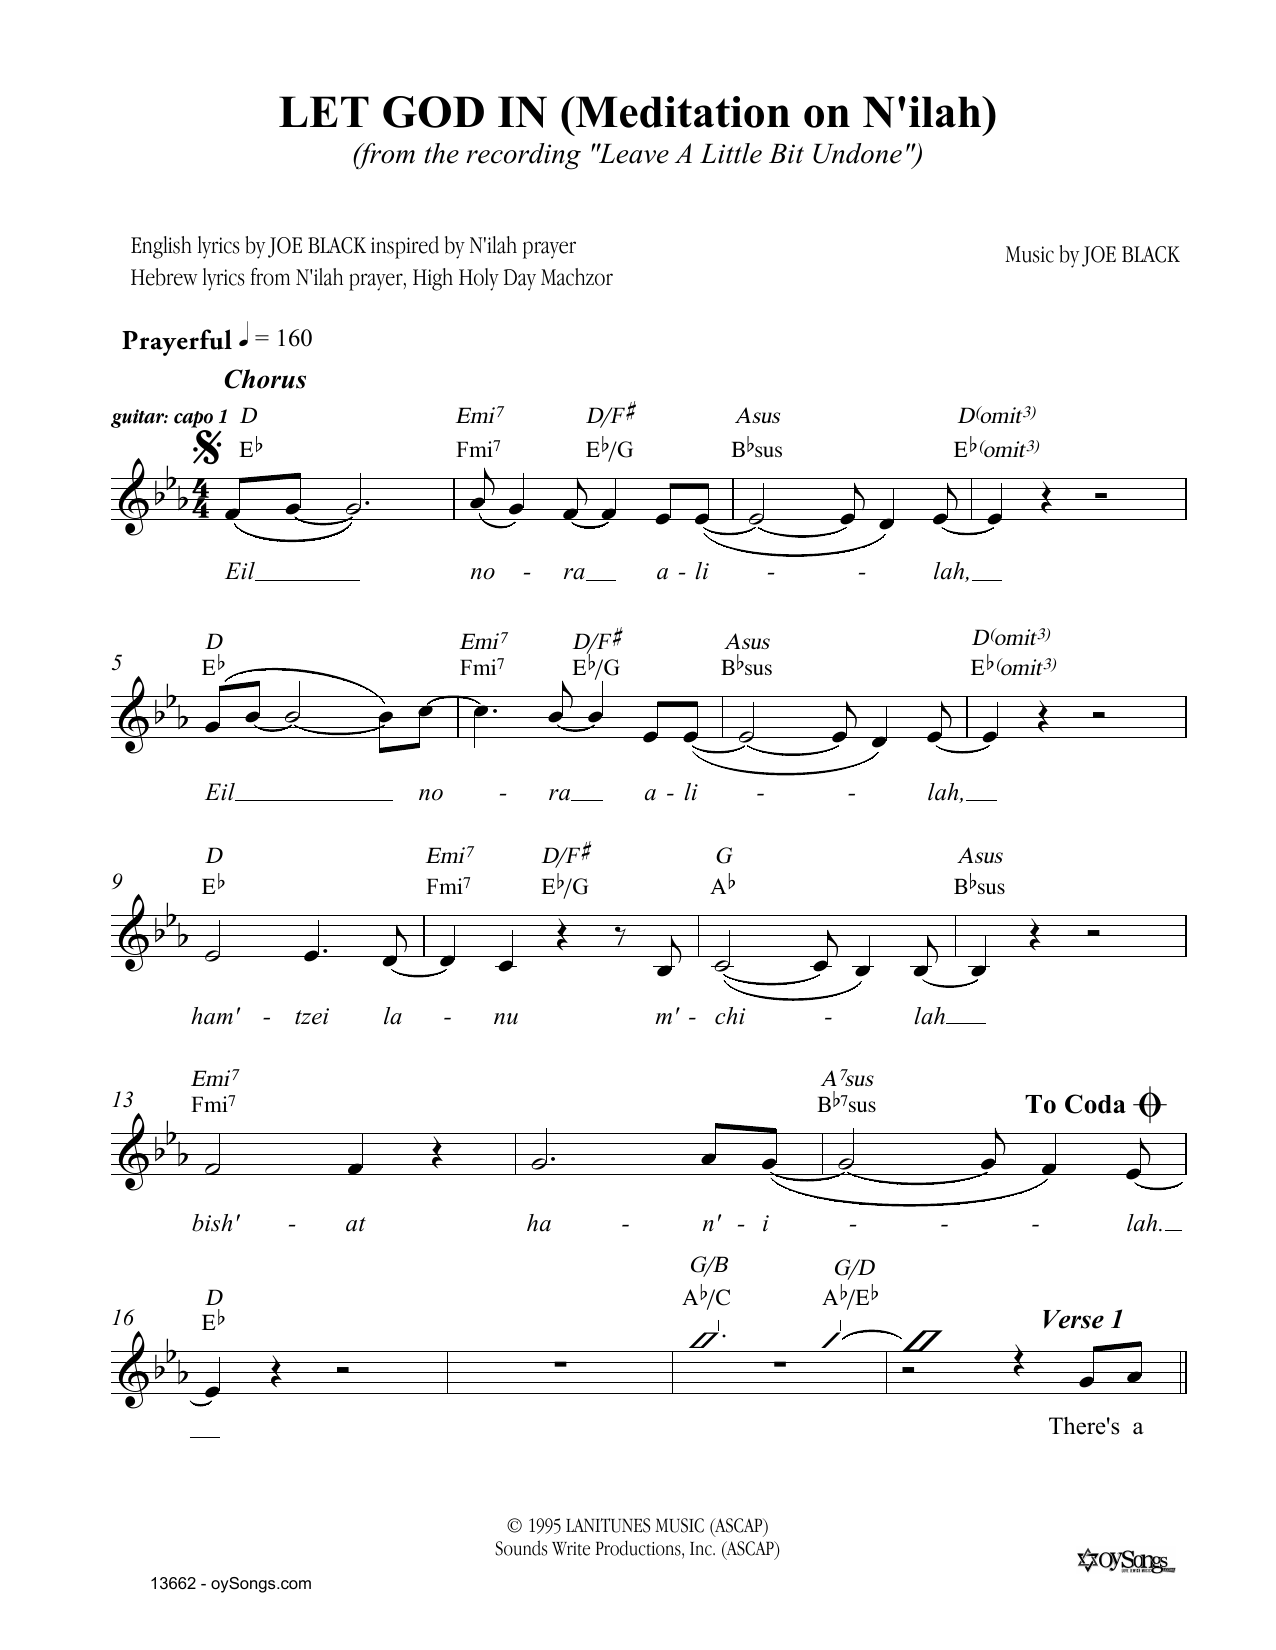 Joe Black Let God In Sheet Music Notes & Chords for Melody Line, Lyrics & Chords - Download or Print PDF